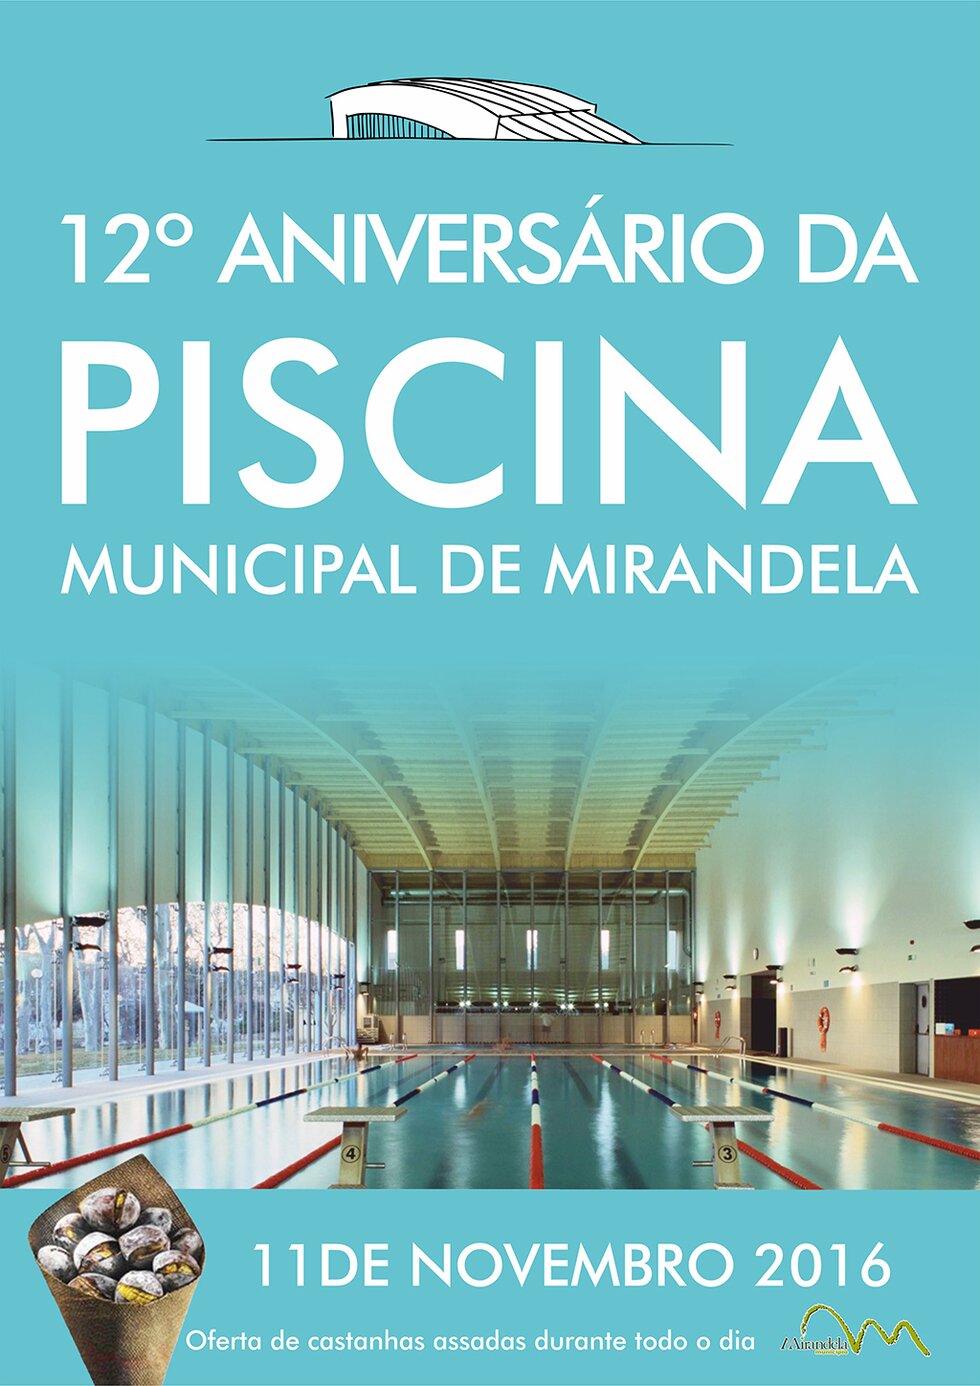 11_NOV_Anivers_rio_da_Piscina_Municipal